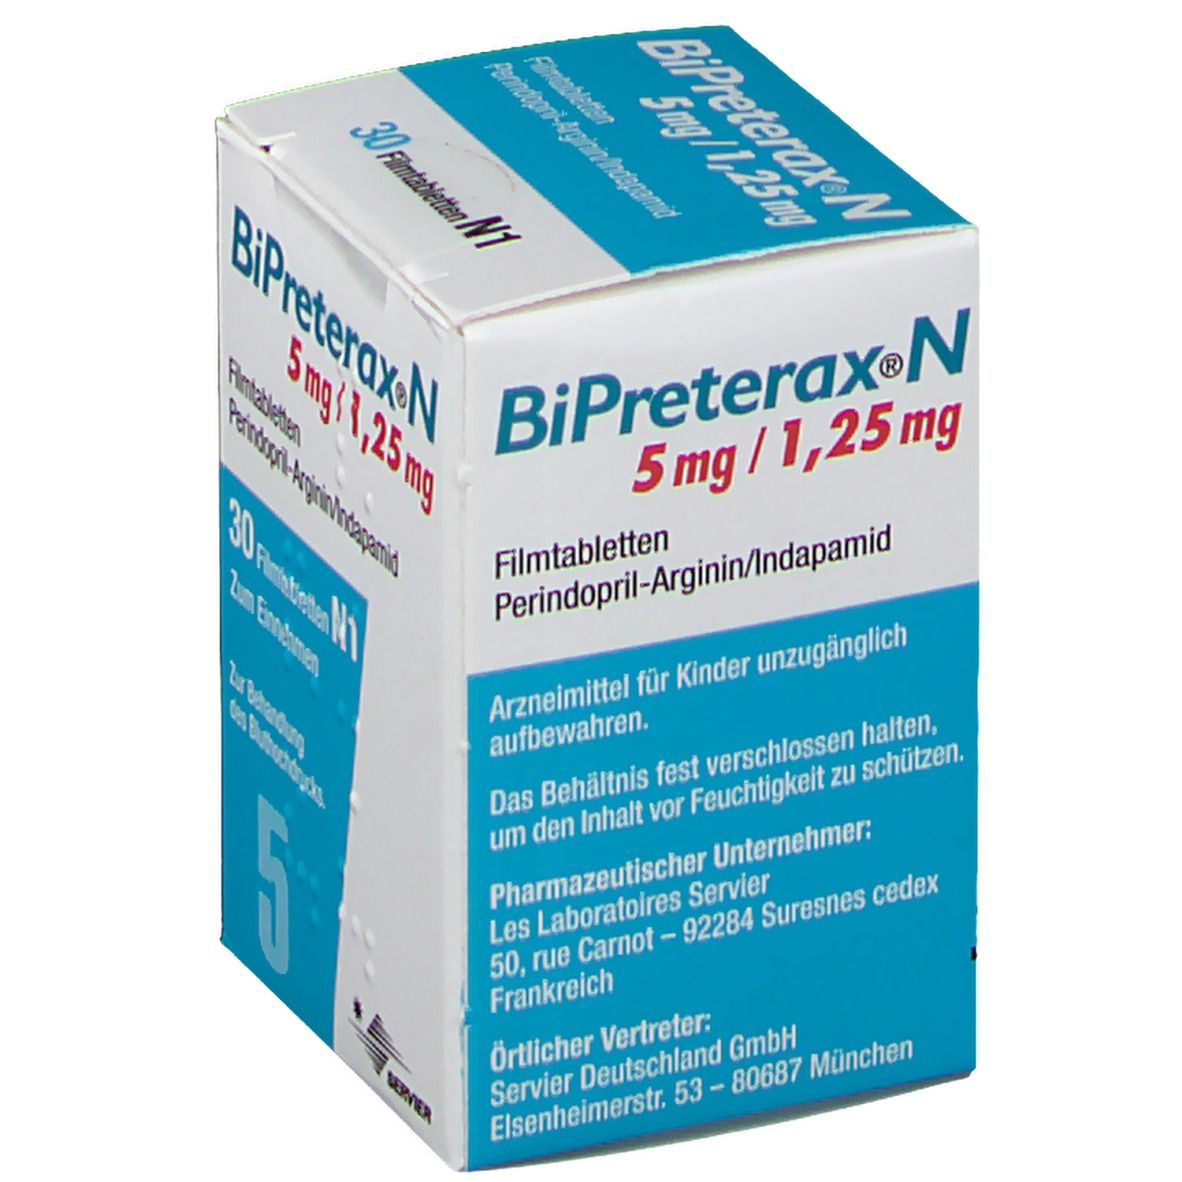 BiPreterax® N 5 mg/1,25 mg